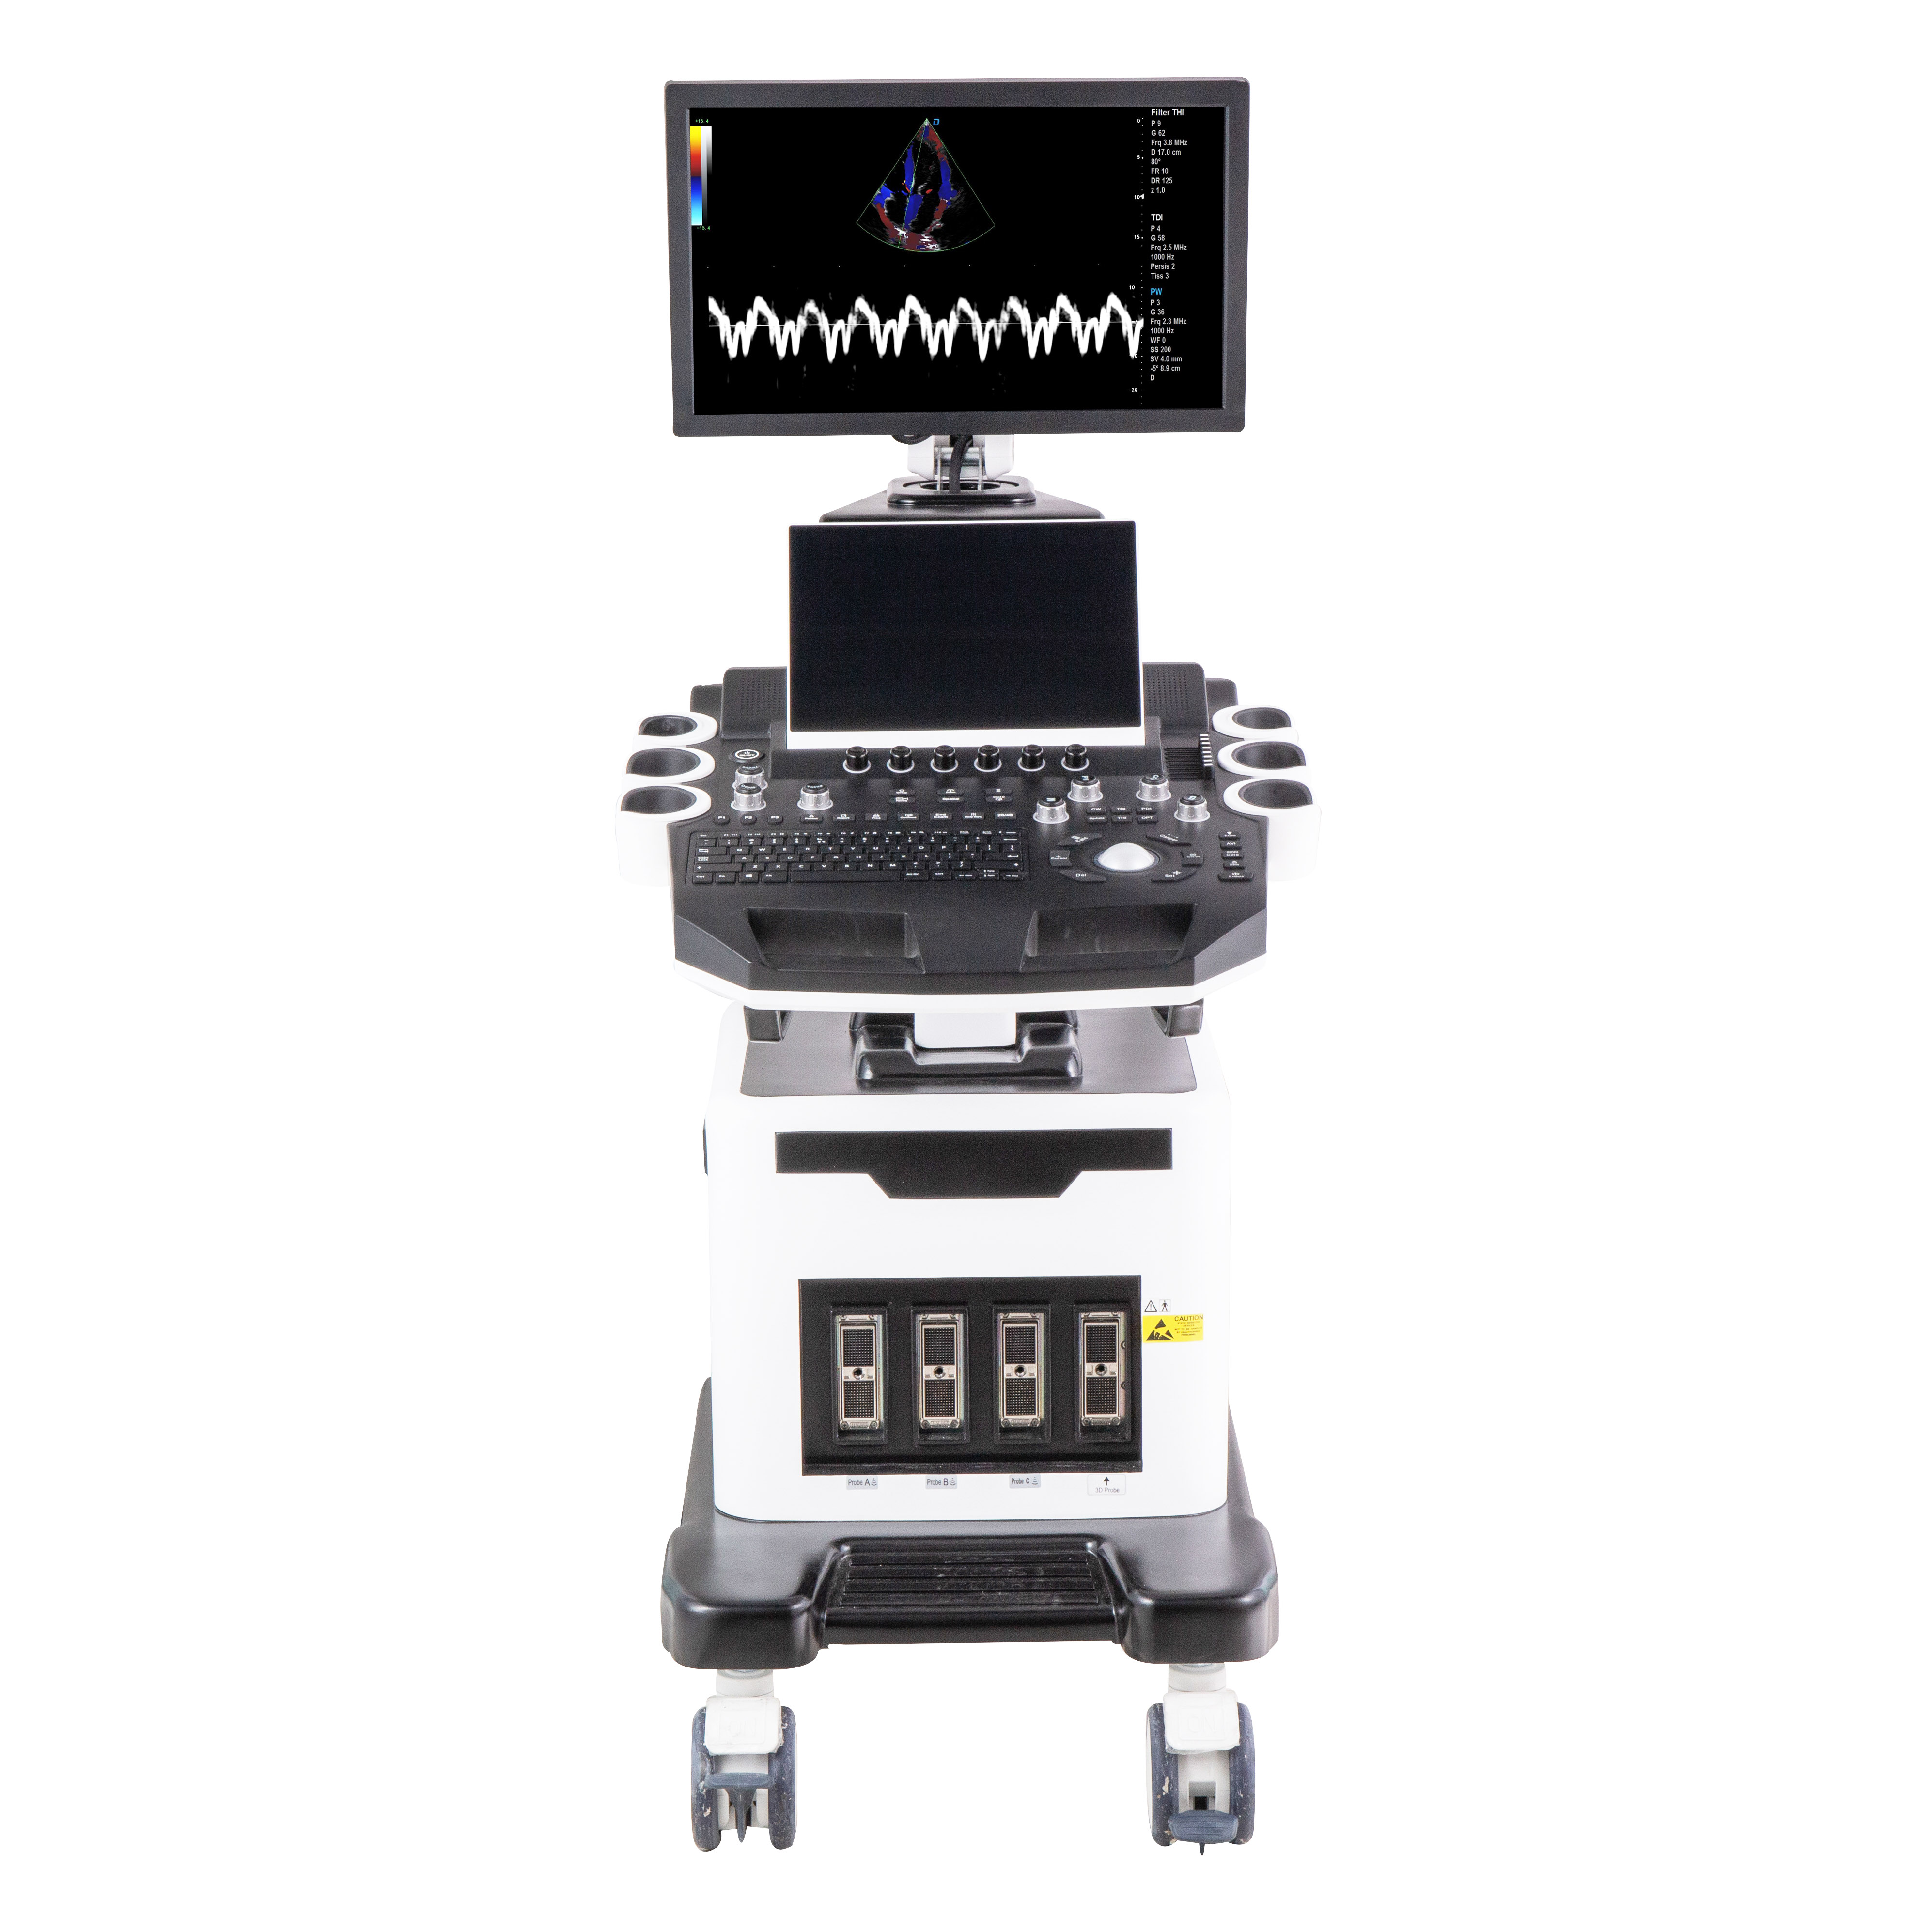 Amain OEM AMDV-T8LITE  3D/4D  Color Doppler siterite ultrasound price/site-rite ultrasound with Fled light source